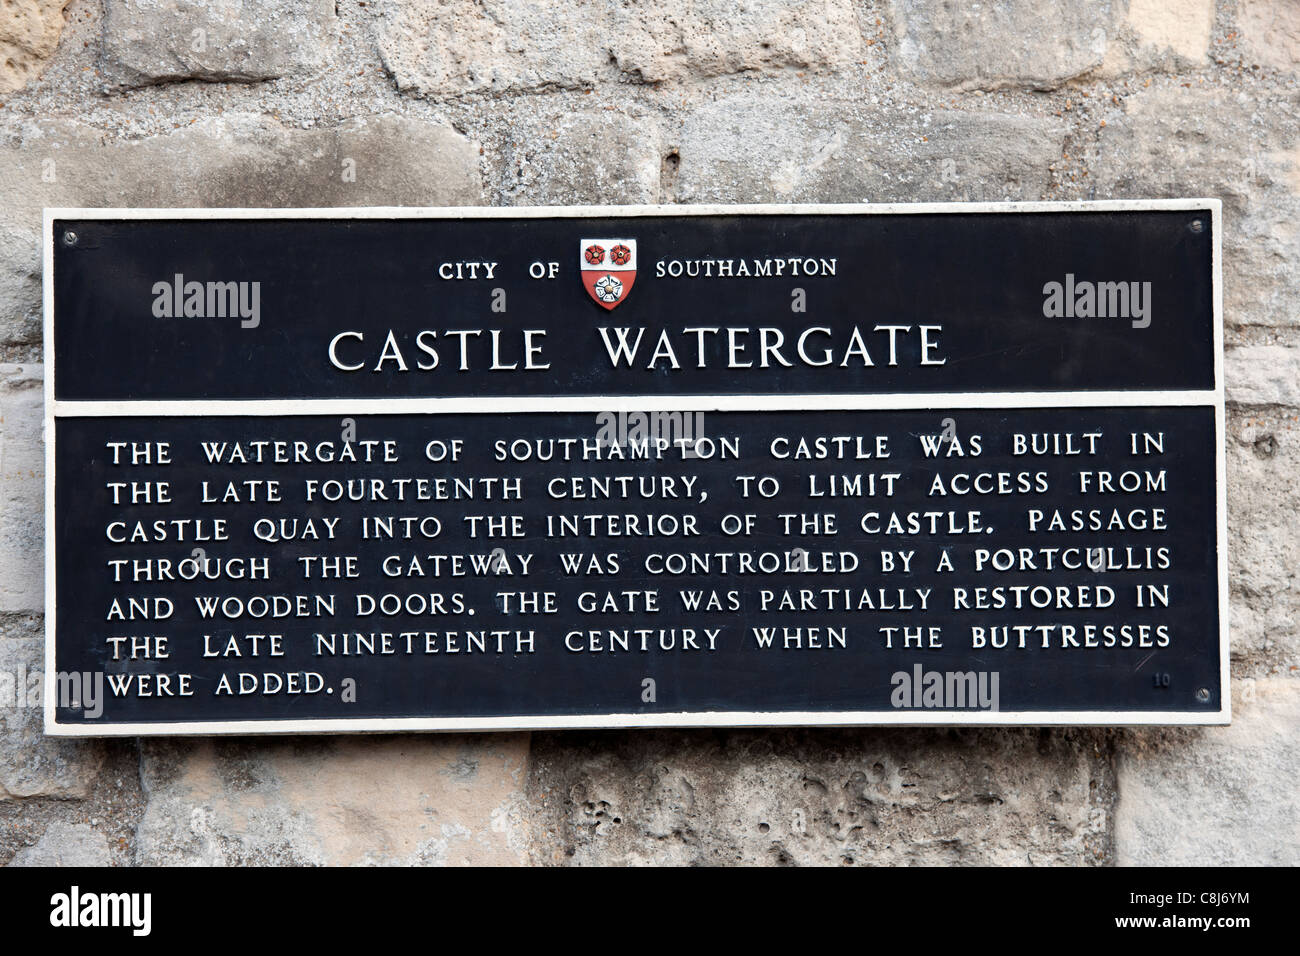 Informationstafel, Schloss Watergate, Southampton, Hampshire, England, UK. Stockfoto